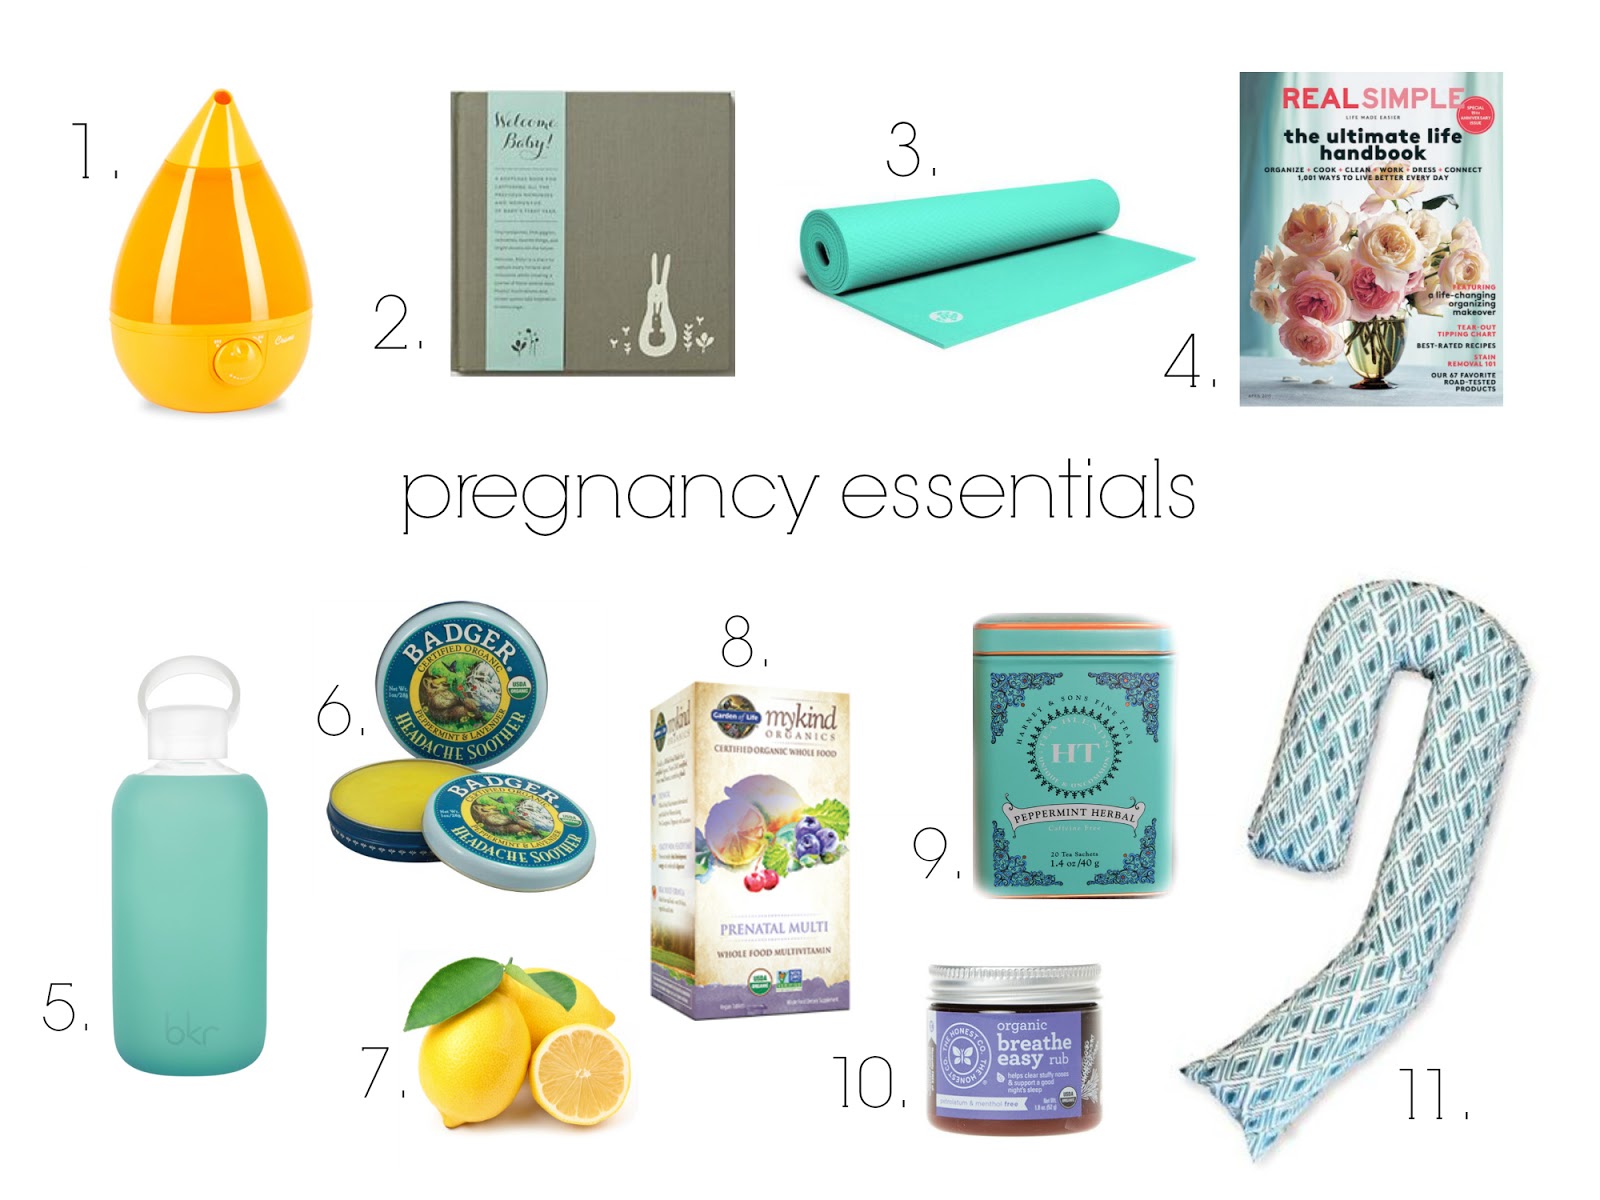 http://4.bp.blogspot.com/-3tcFapKvS8Y/VRCA4nYg99I/AAAAAAAAGyU/BoeCl_PlL5E/s1600/pregnancy_essentials.jpg